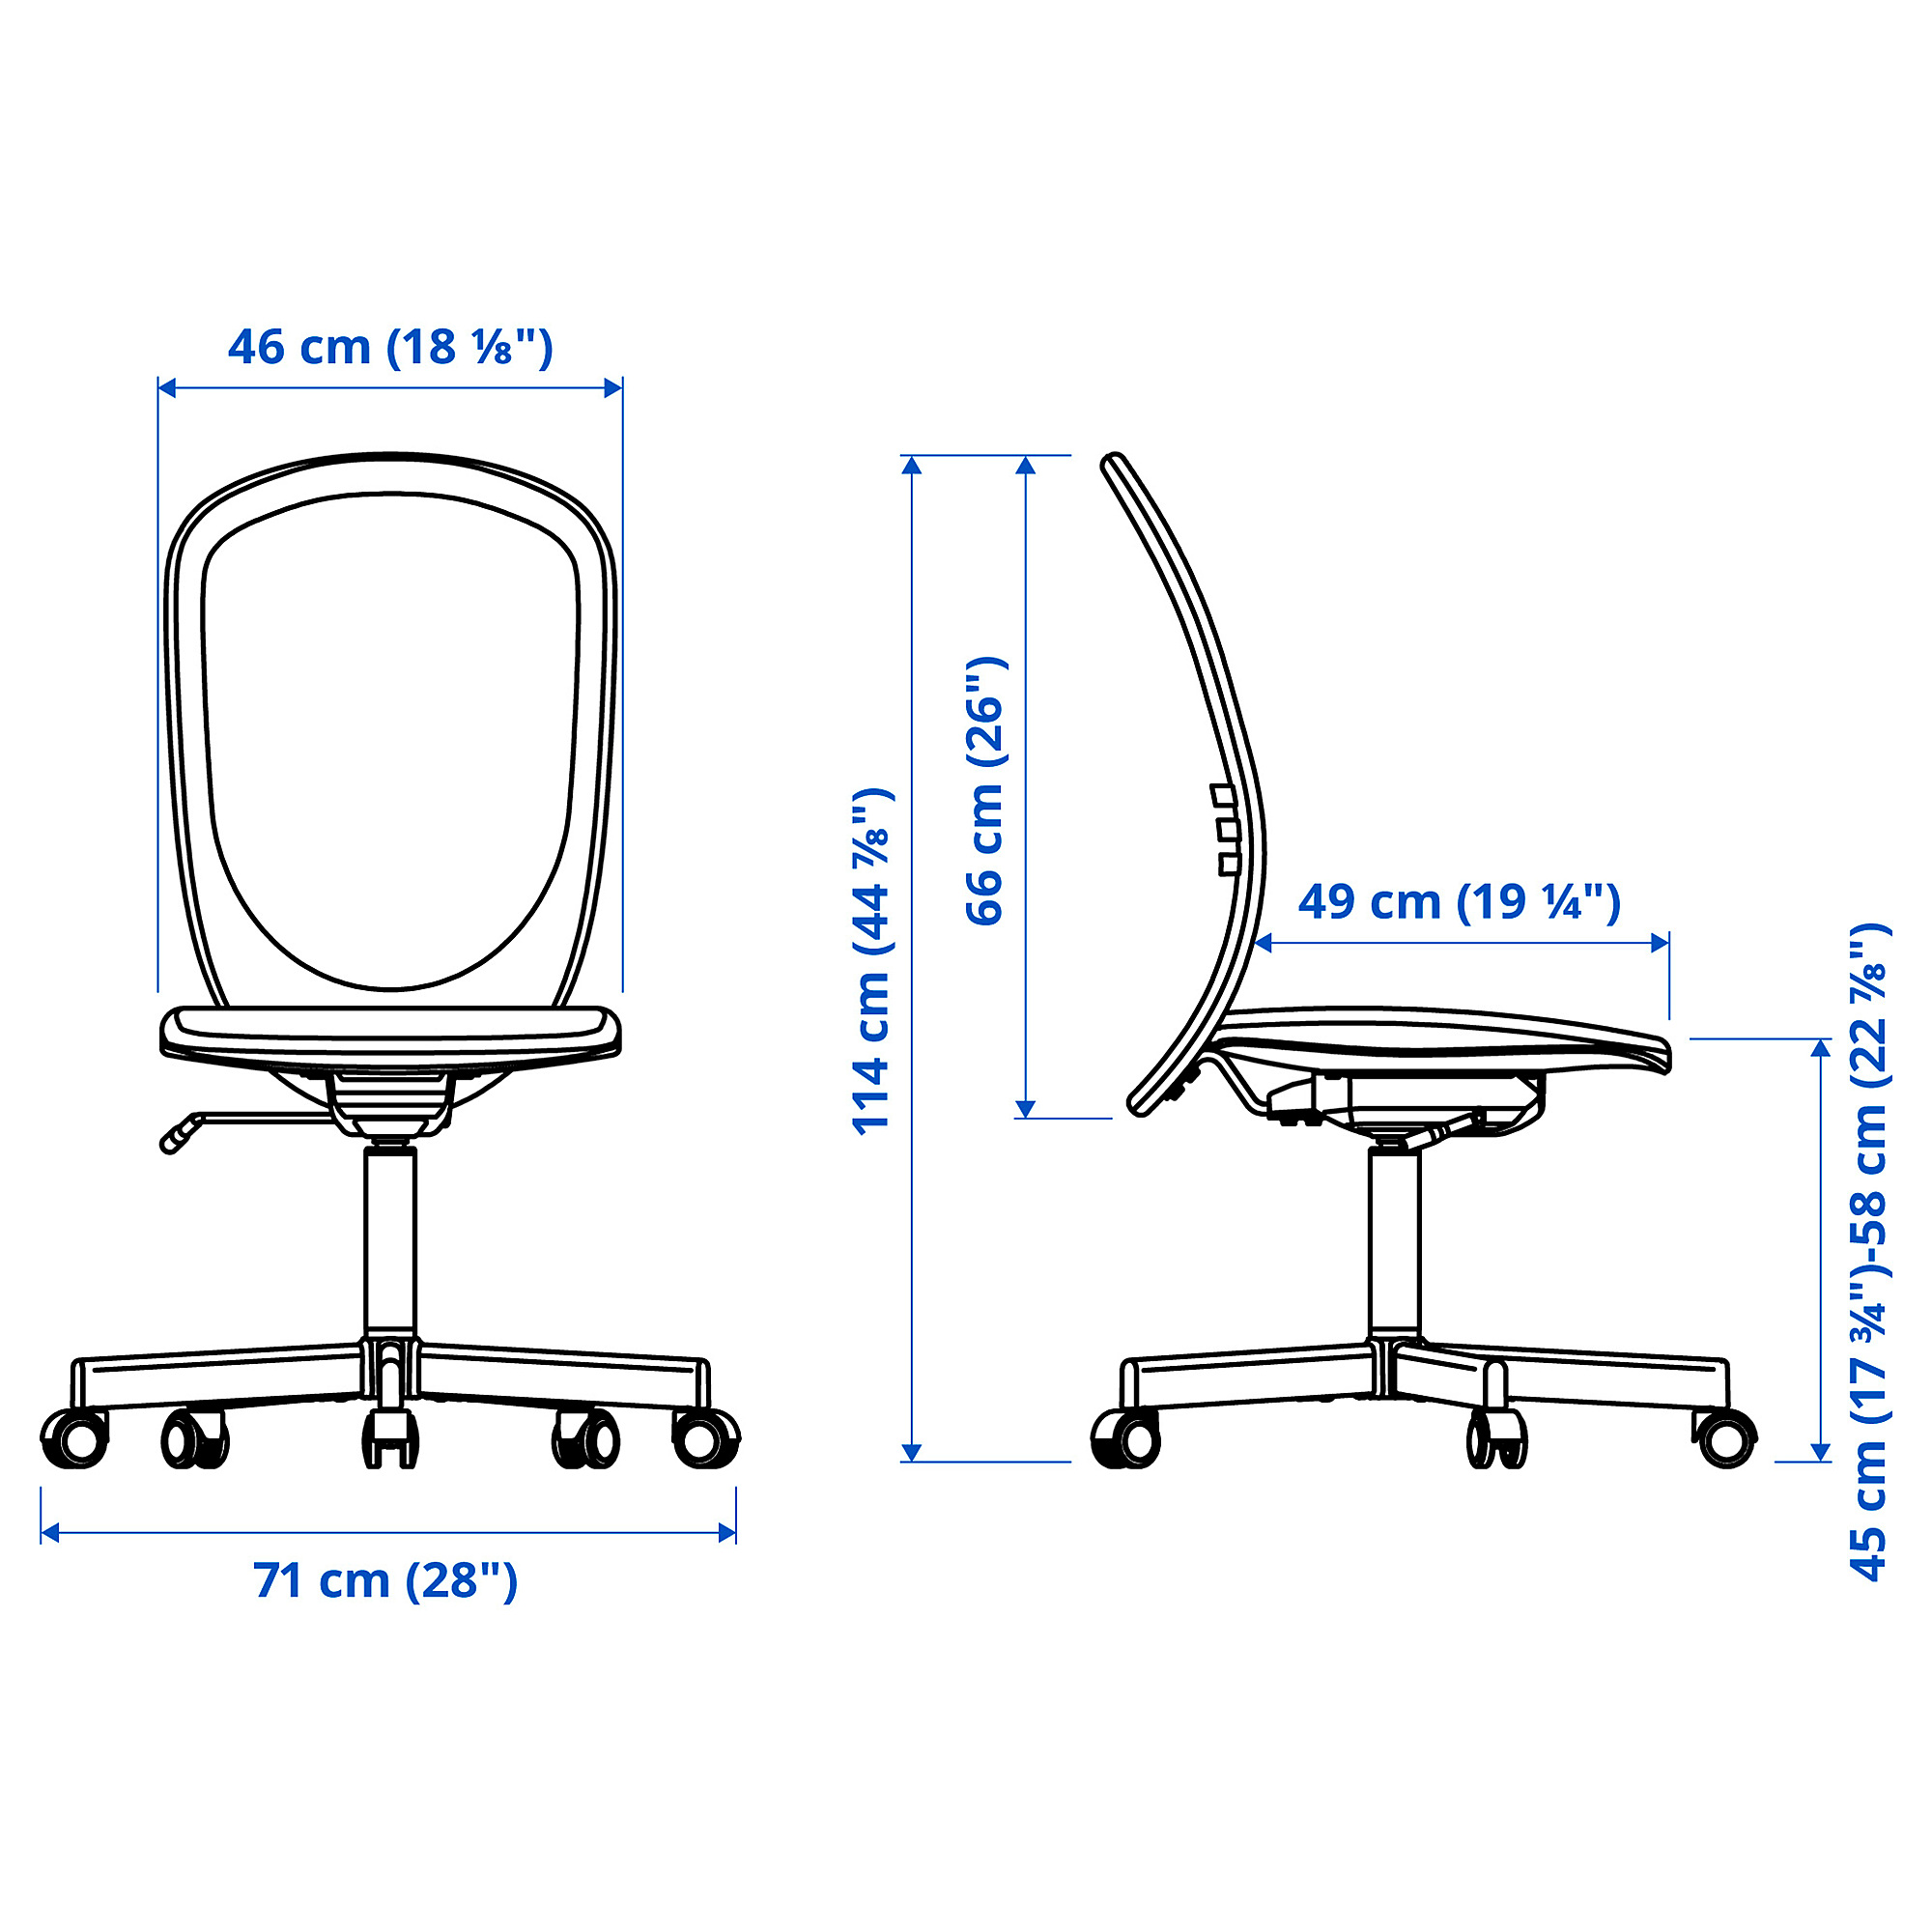 Afwijzen teer meest FLINTAN - office chair, beige | IKEA Hong Kong and Macau